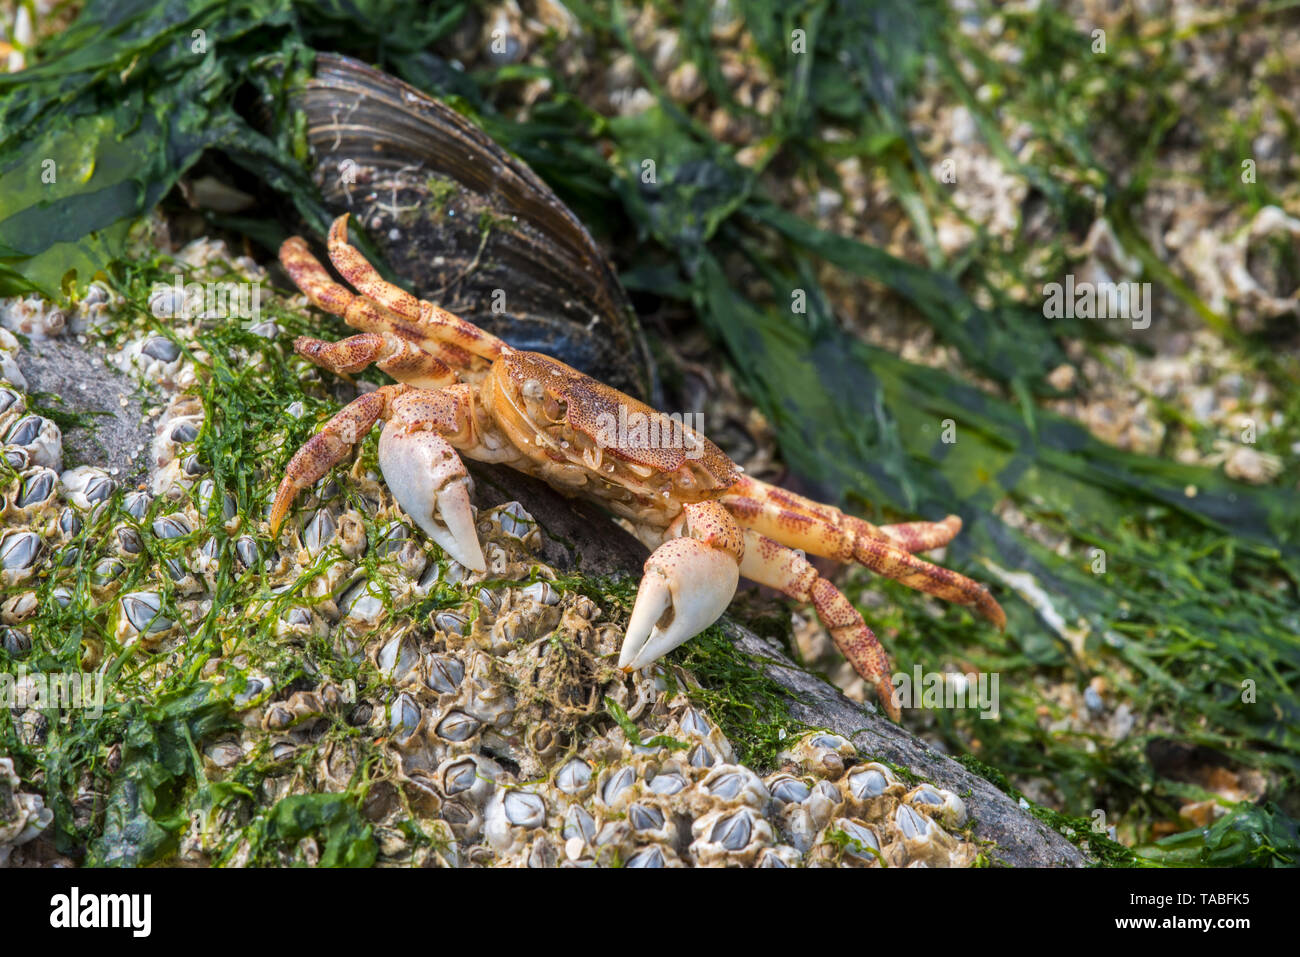 Dead Japanese shore crab / Asian shore crab (Hemigrapsus sanguineus) exotic invasive species in North America and Europe but native to East Asia Stock Photo